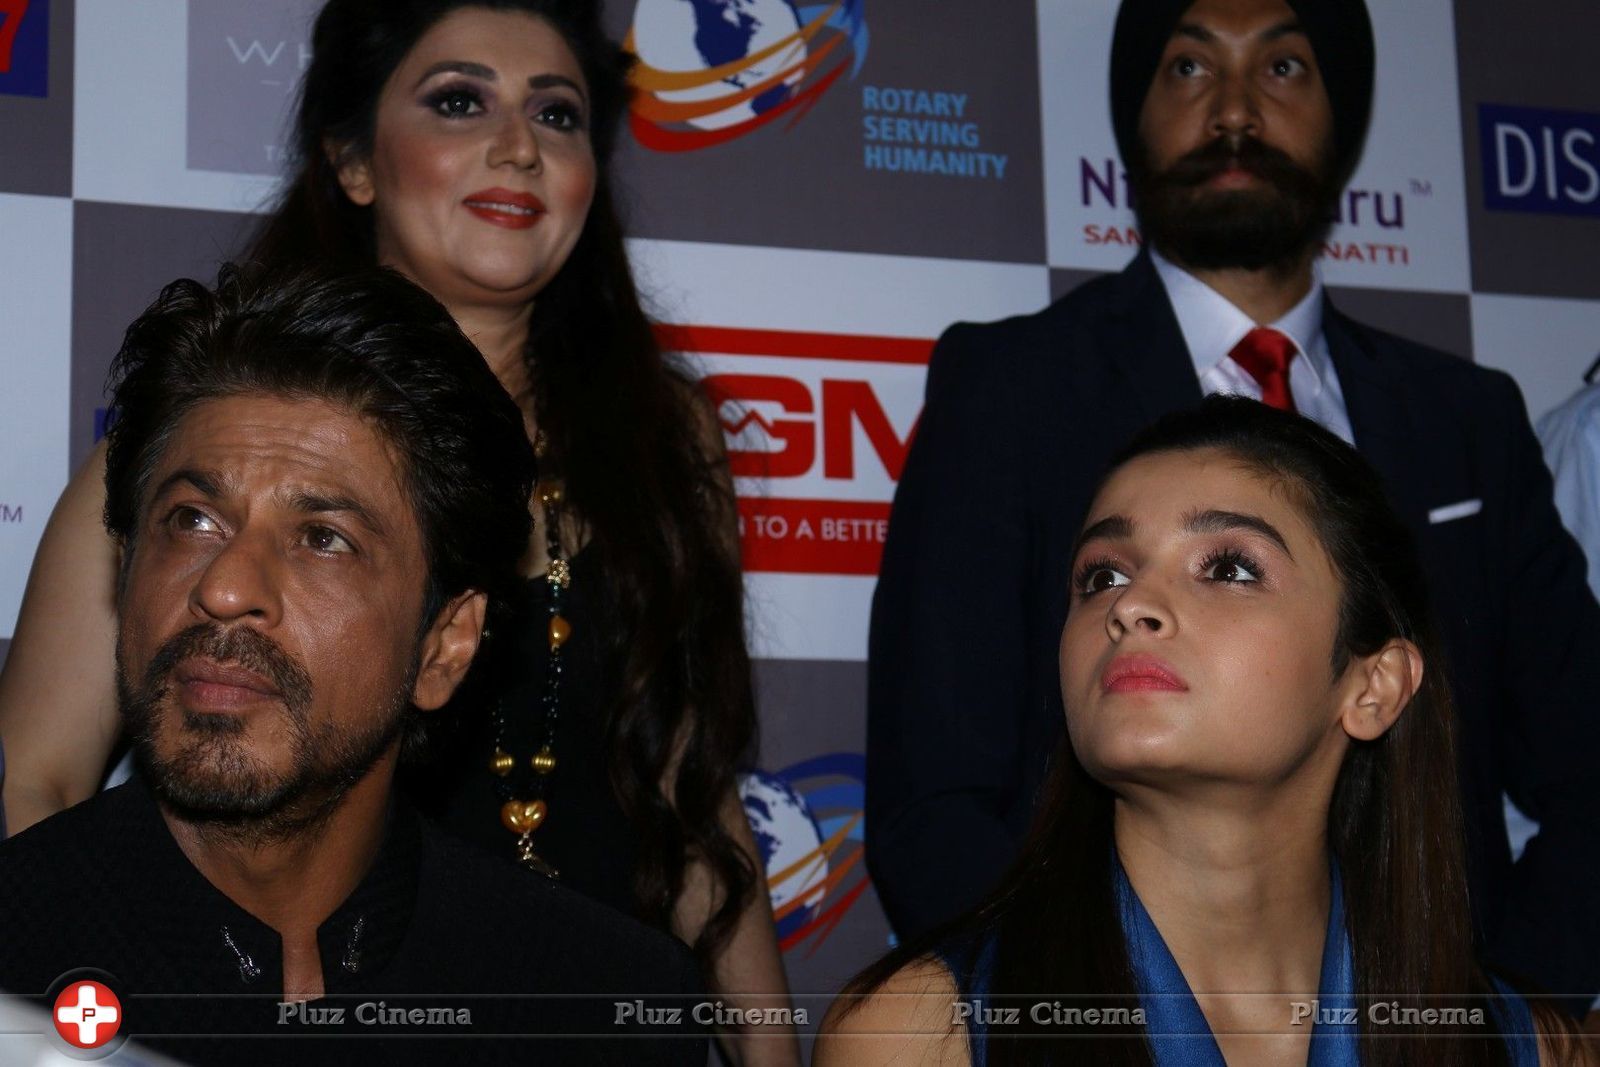 Shah Rukh Khan and Alia Bhatt At Archhar Kochar Fashion Show Pictures | Picture 1458660